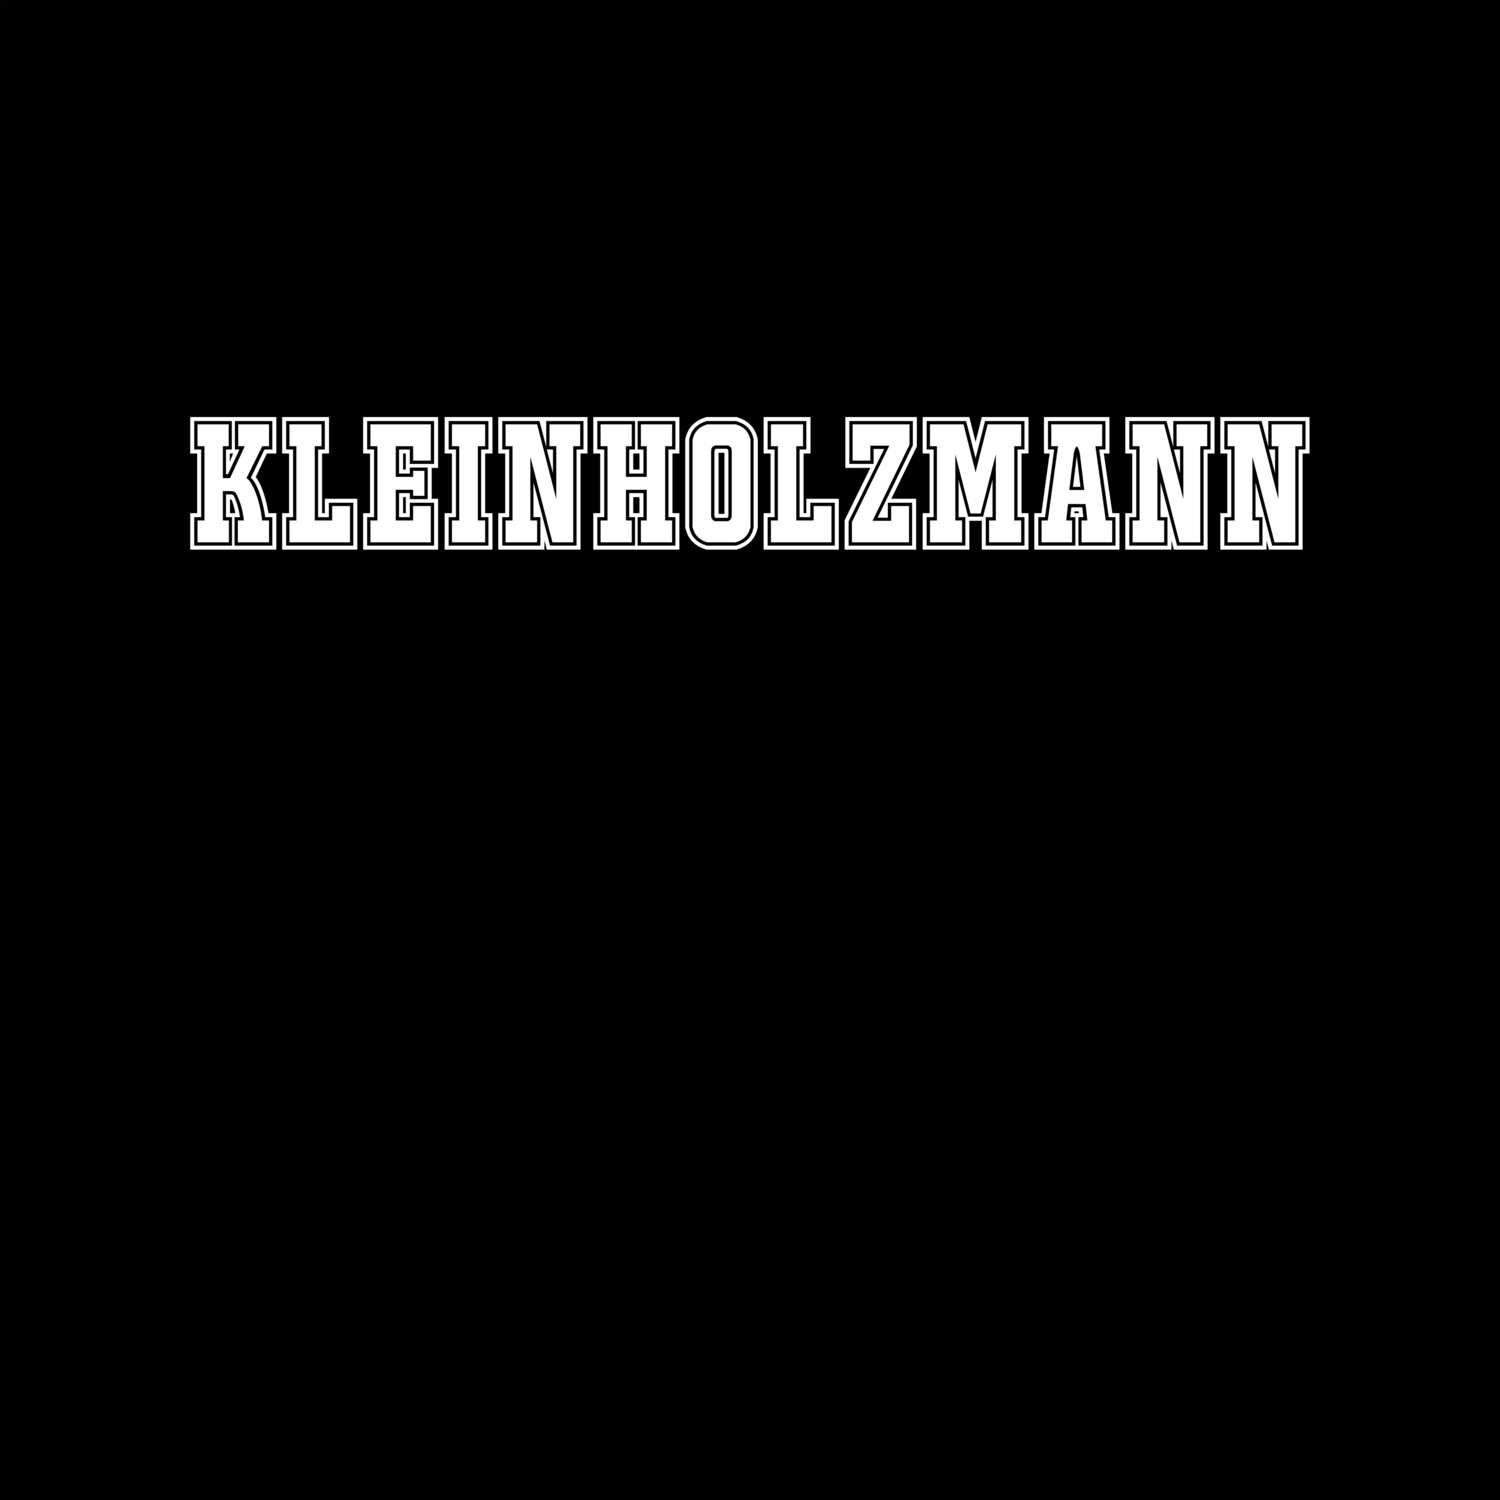 Kleinholzmann T-Shirt »Classic«